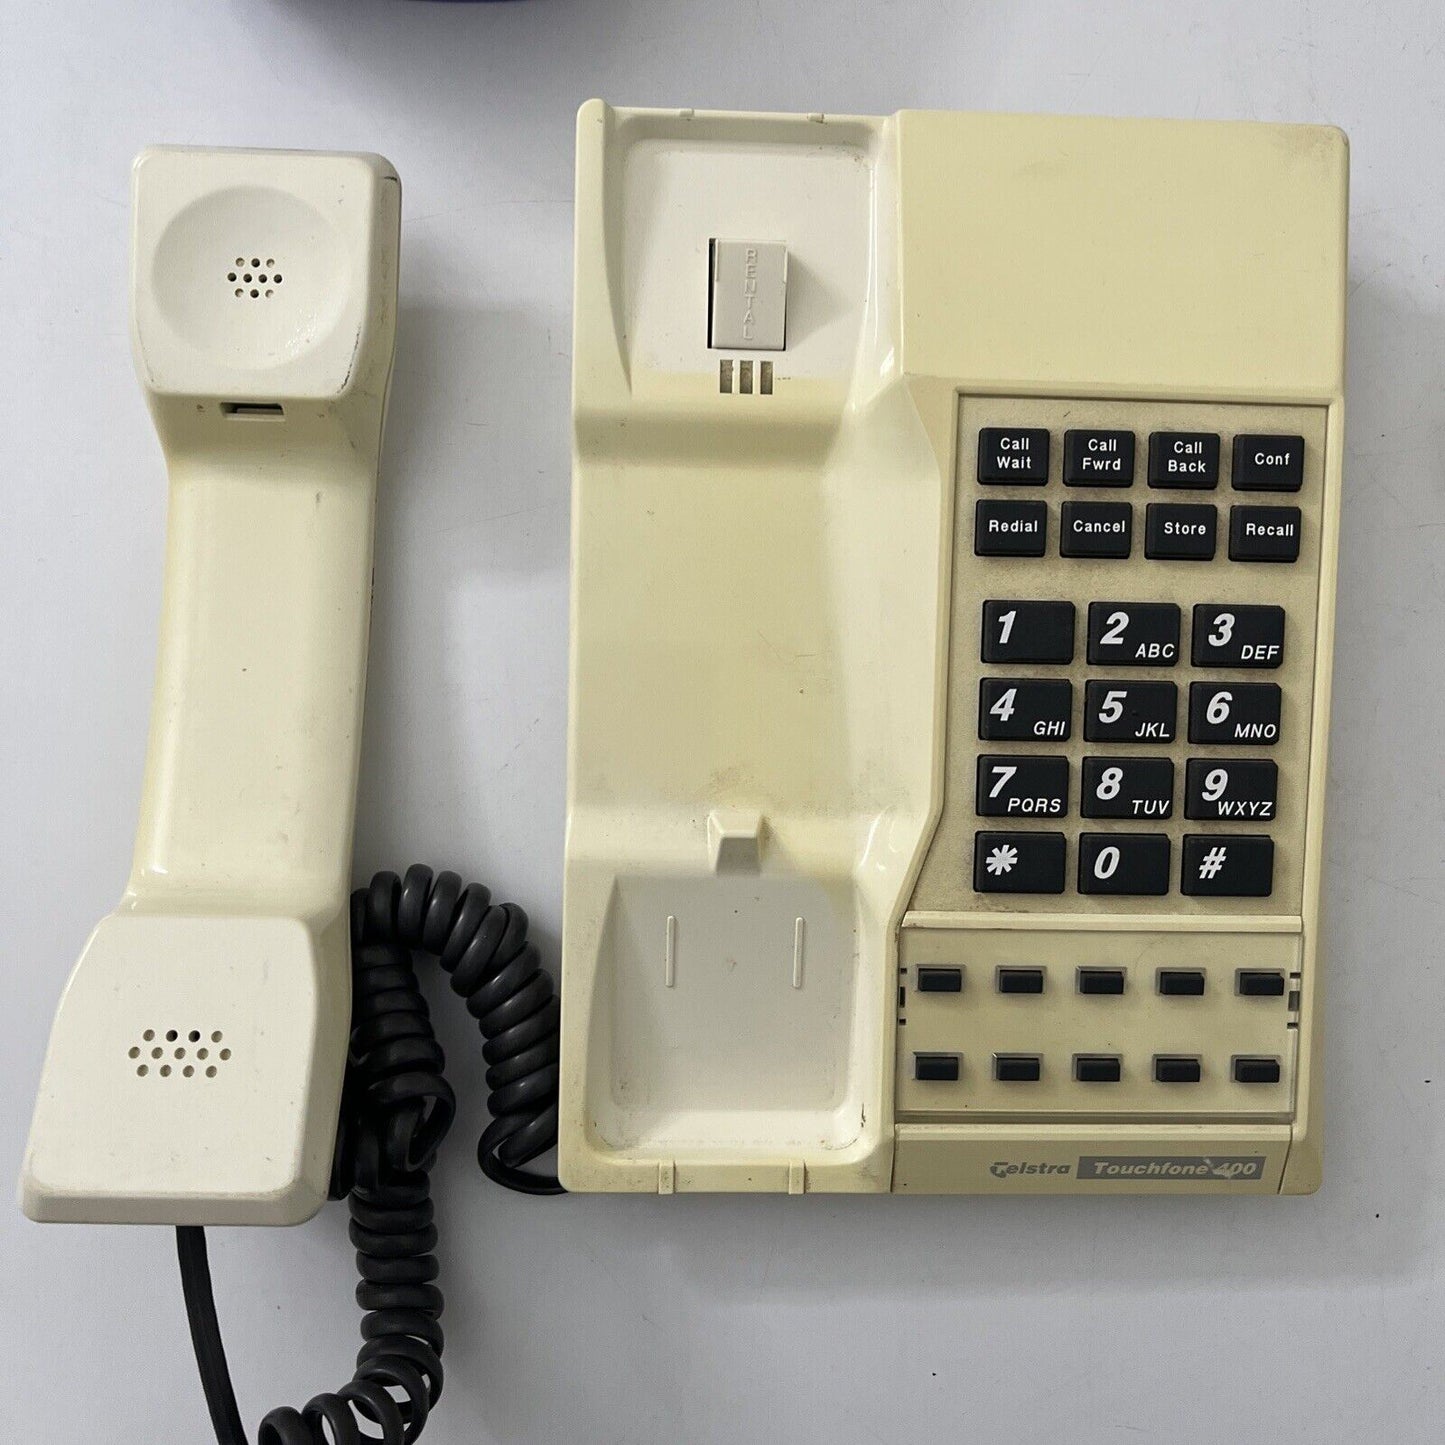 Telstra Touchfone 400 Landline Corded Phone